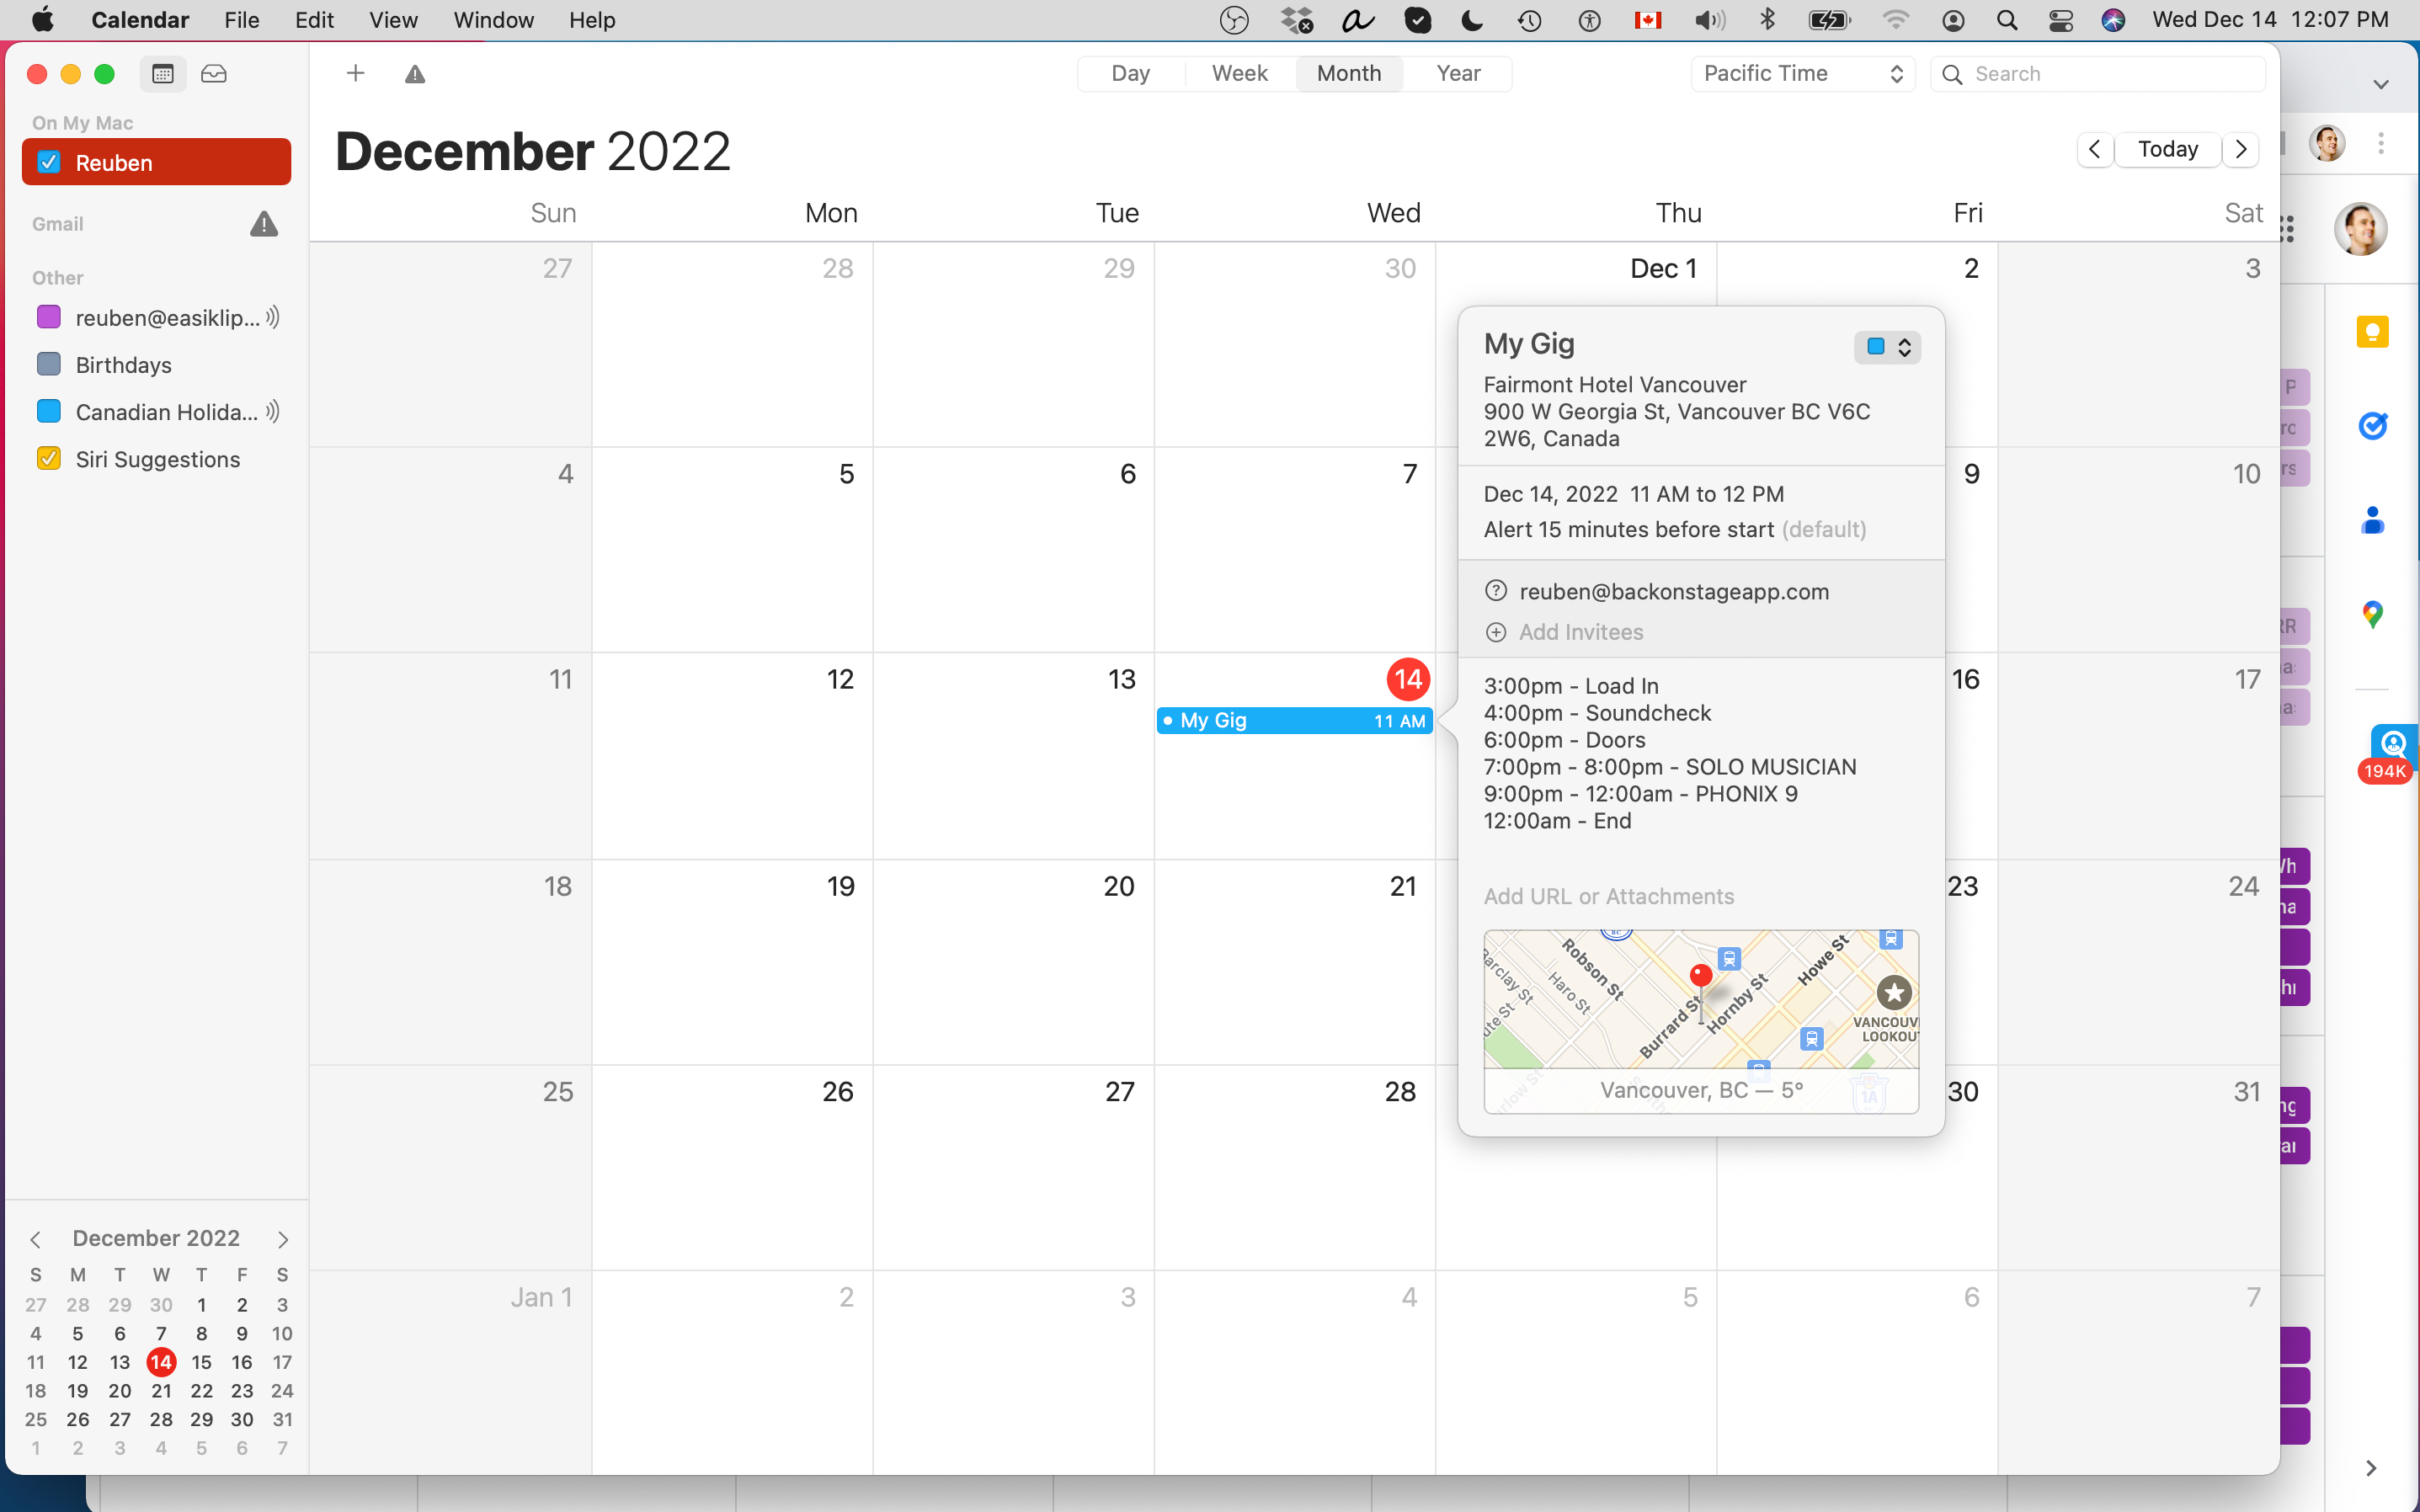 Apple calendar iCal group calendar for bands